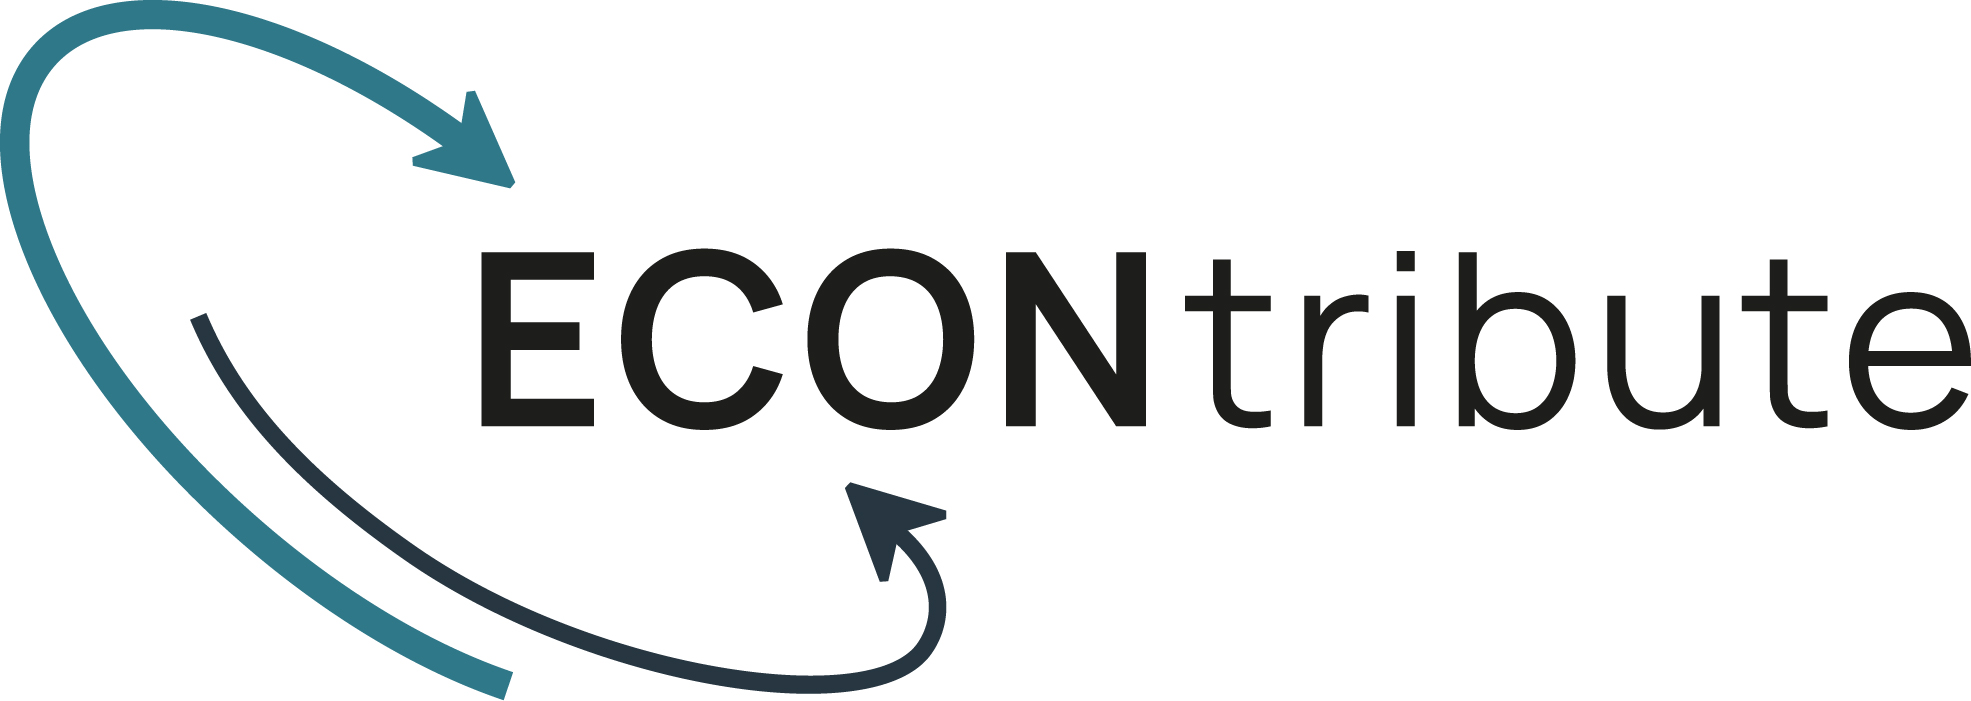 1_1_Logo-ECONtribute.jpg